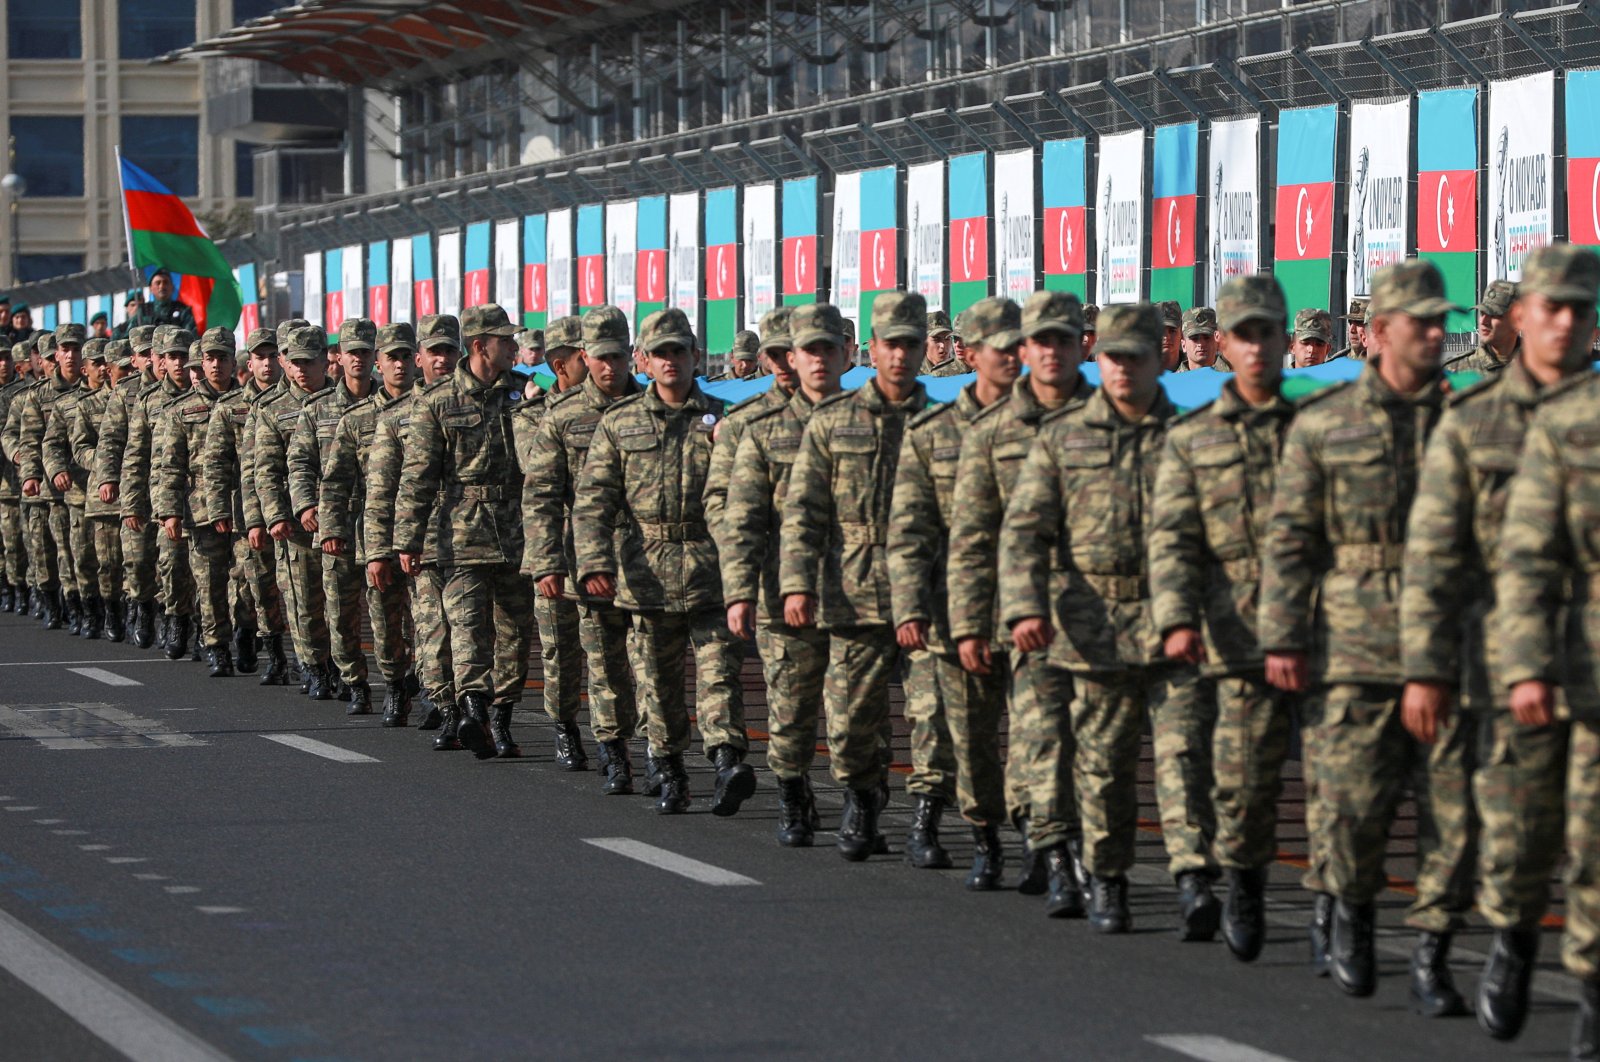 Azerbaijani service members take part in a procession marking the anniversary of the end of the 2020 military conflict over Nagorno-Karabakh region, in Baku, Azerbaijan, Nov. 8, 2021. (REUTERS/Aziz Karimov)